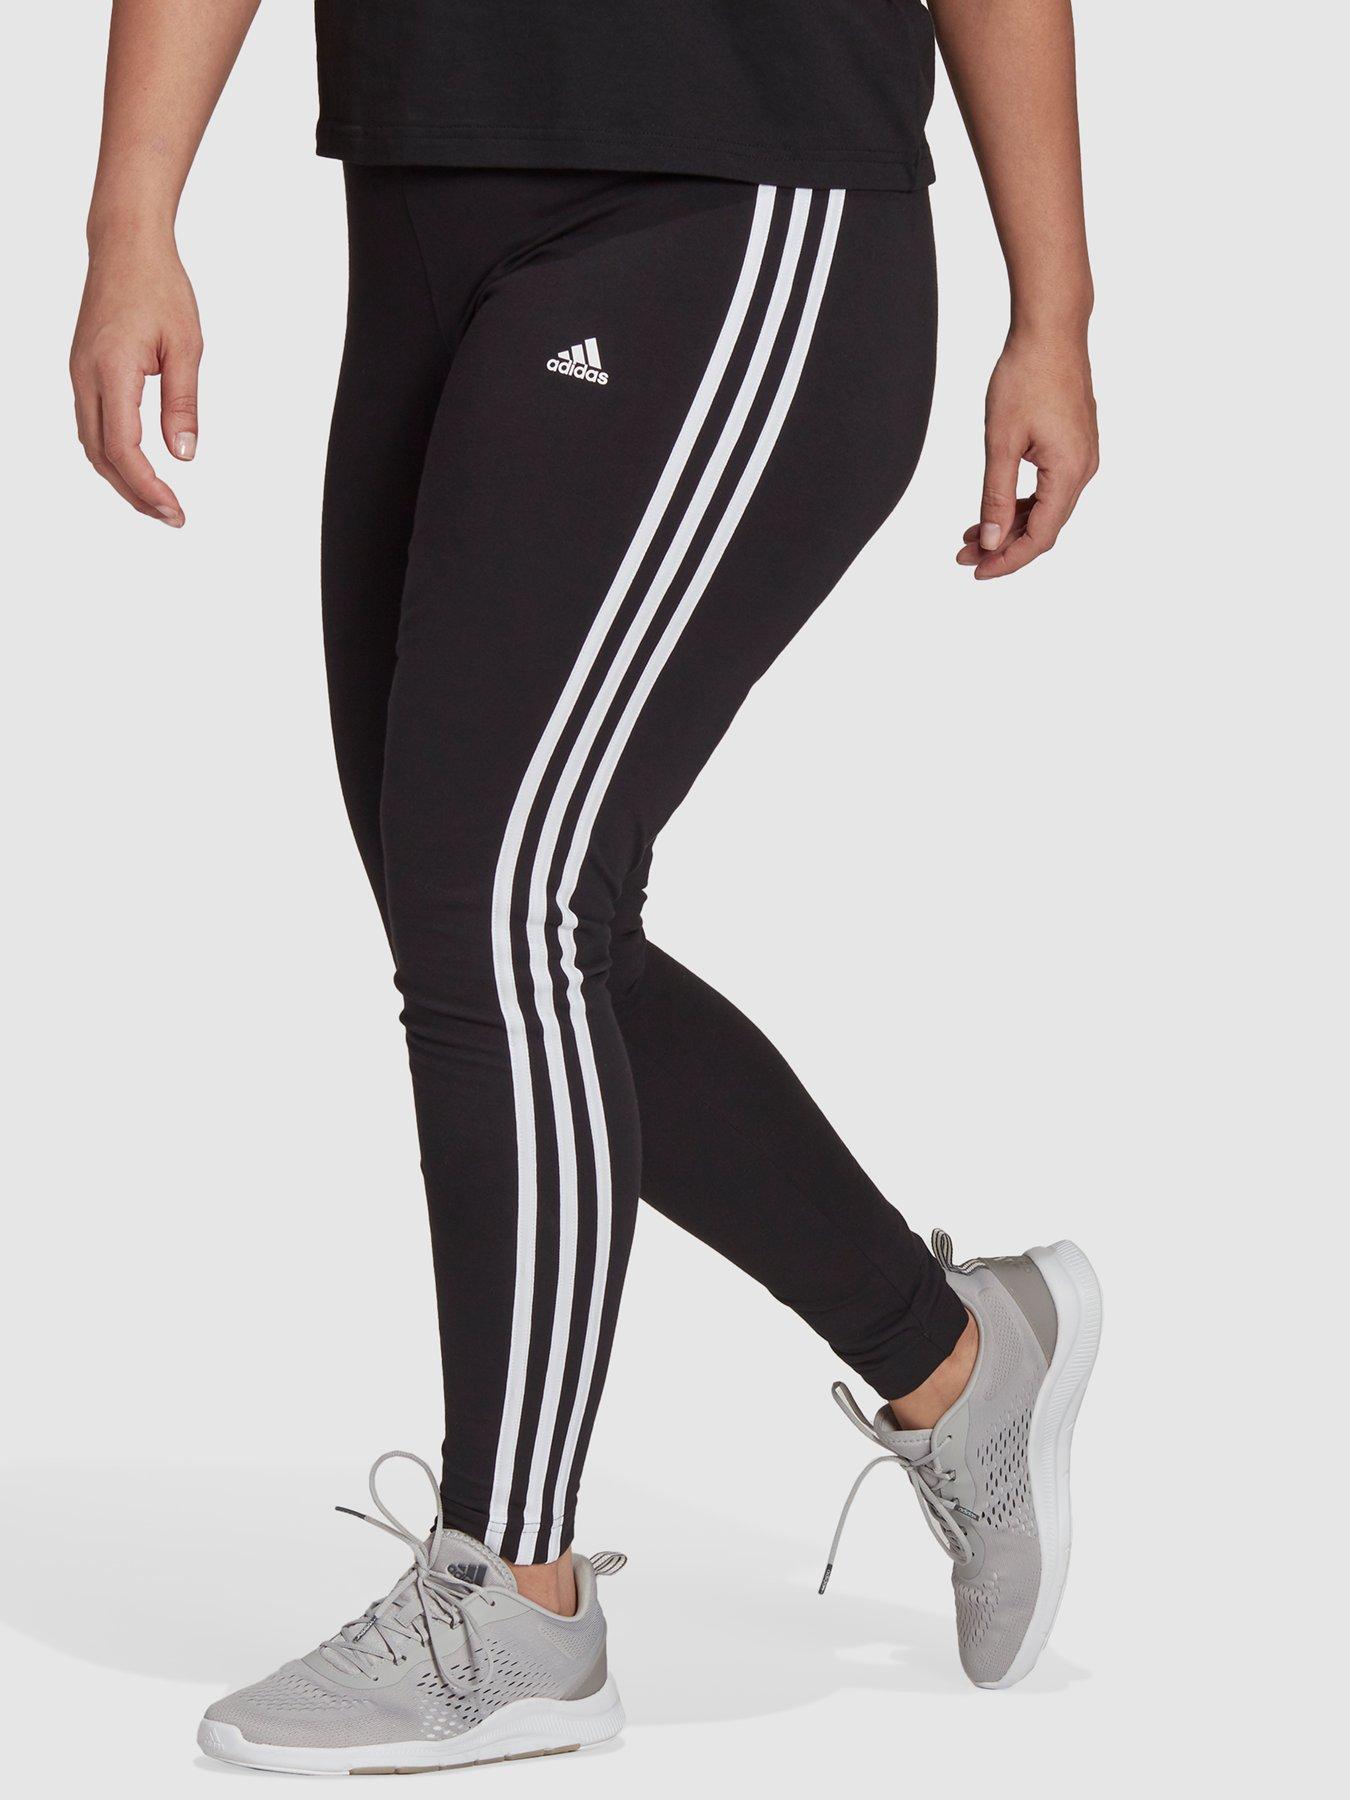 3 Stripes Legging - Plus Size - Black/White